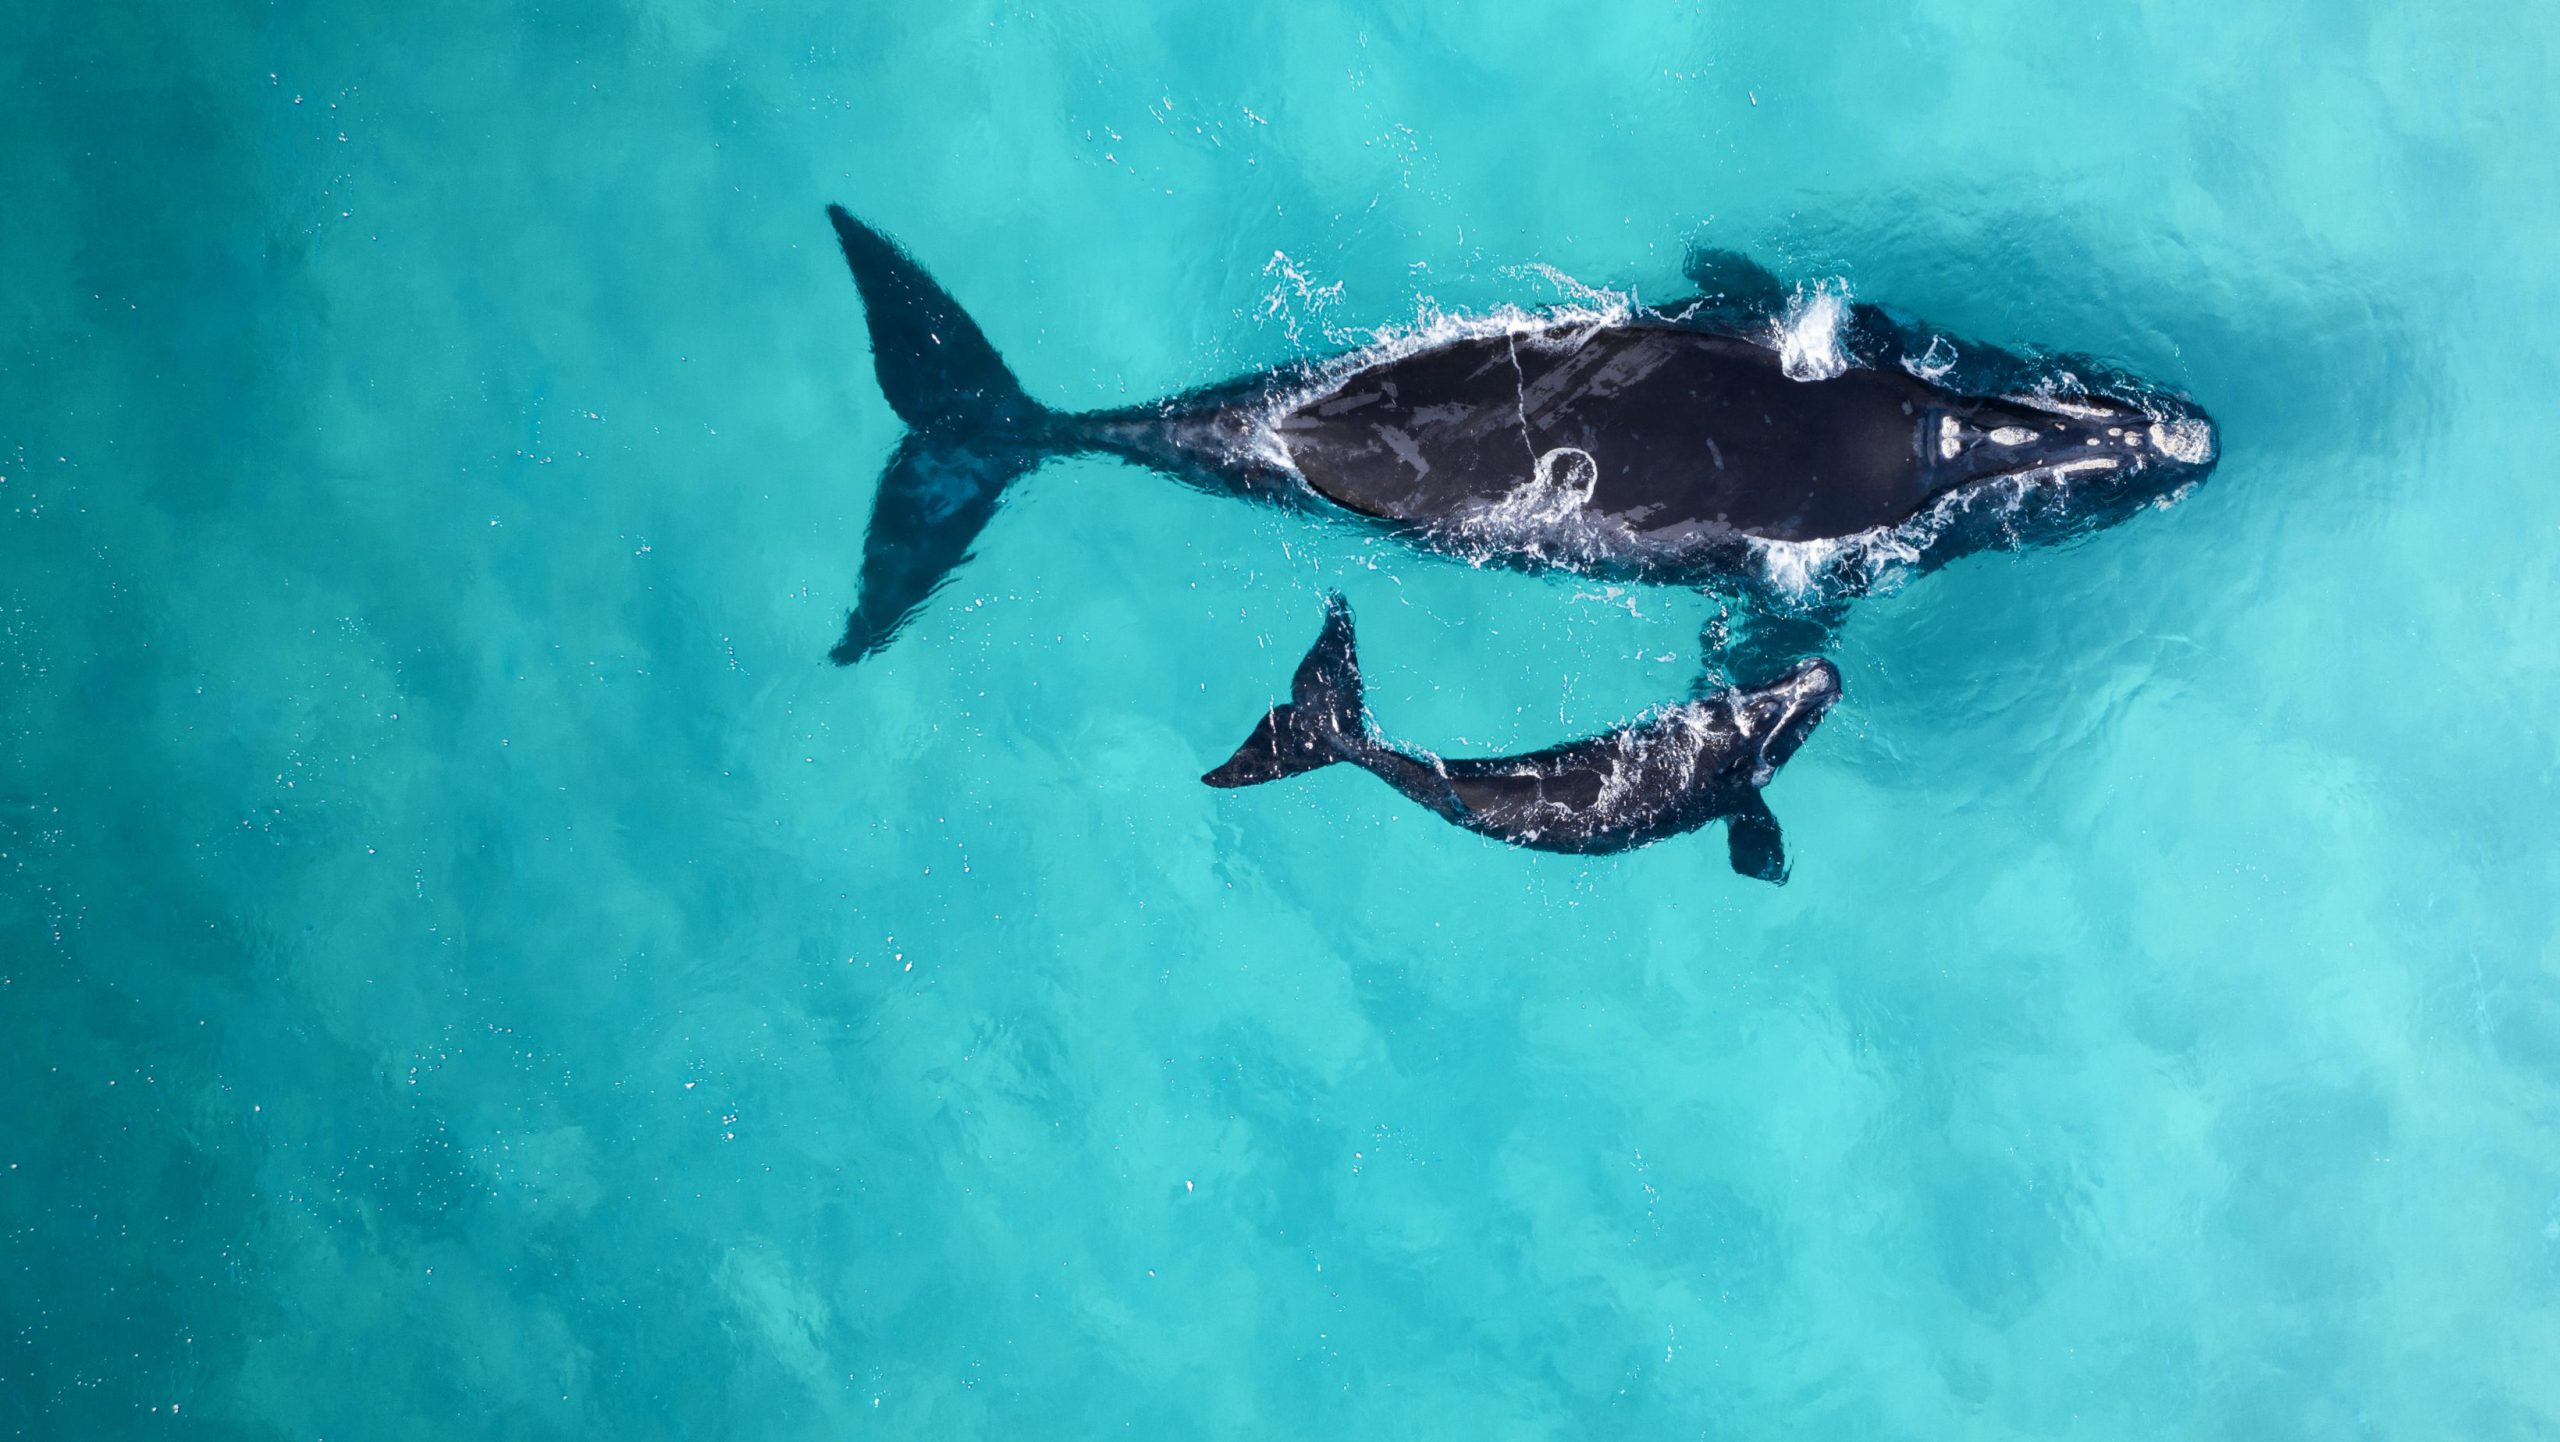 Whale and calf, Lewis Burnett / Ocean Image Bank